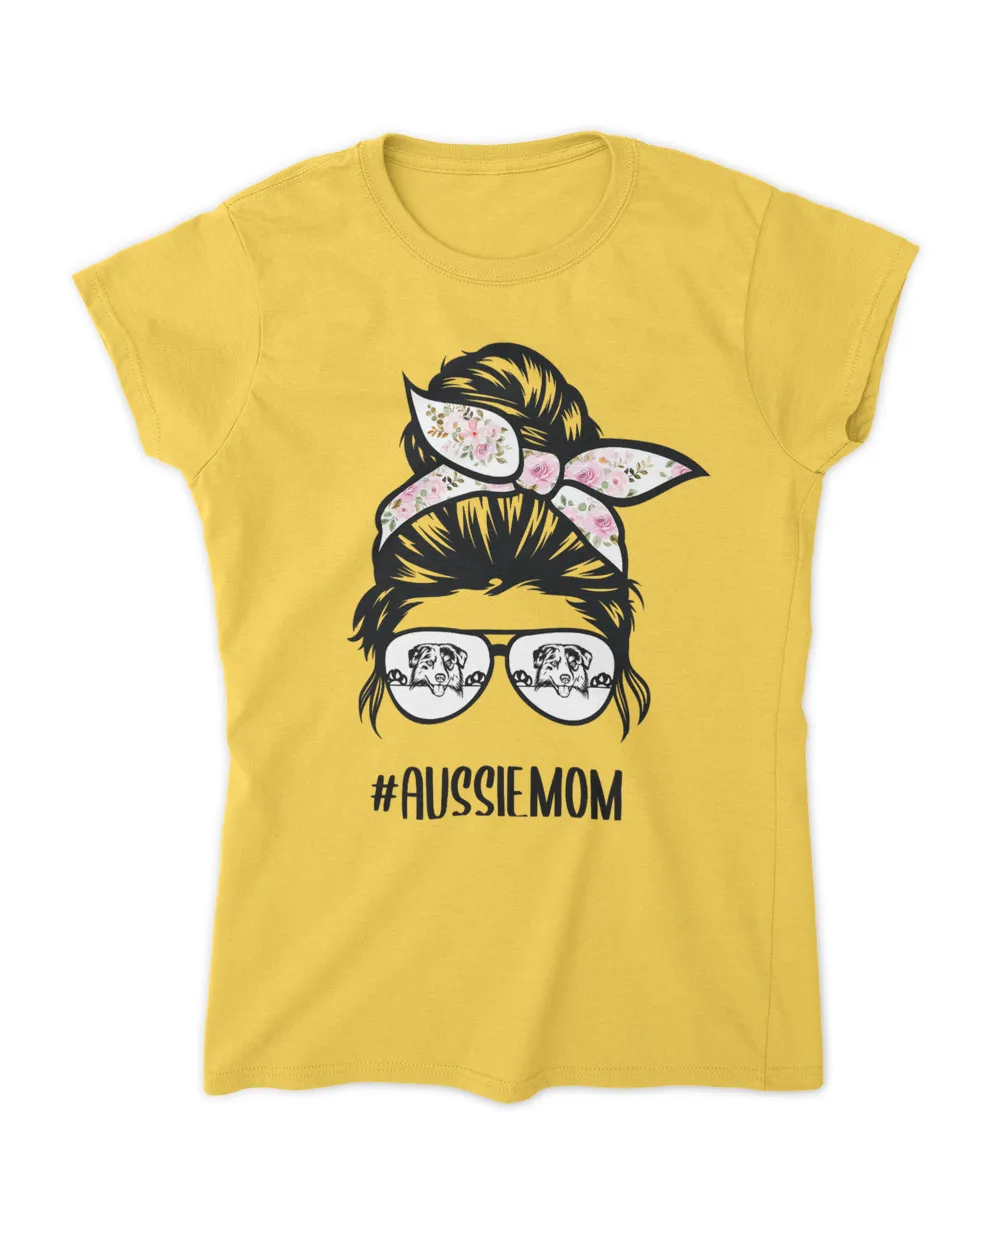 Aussie Mom Messy Bun hair glasses T-Shirt